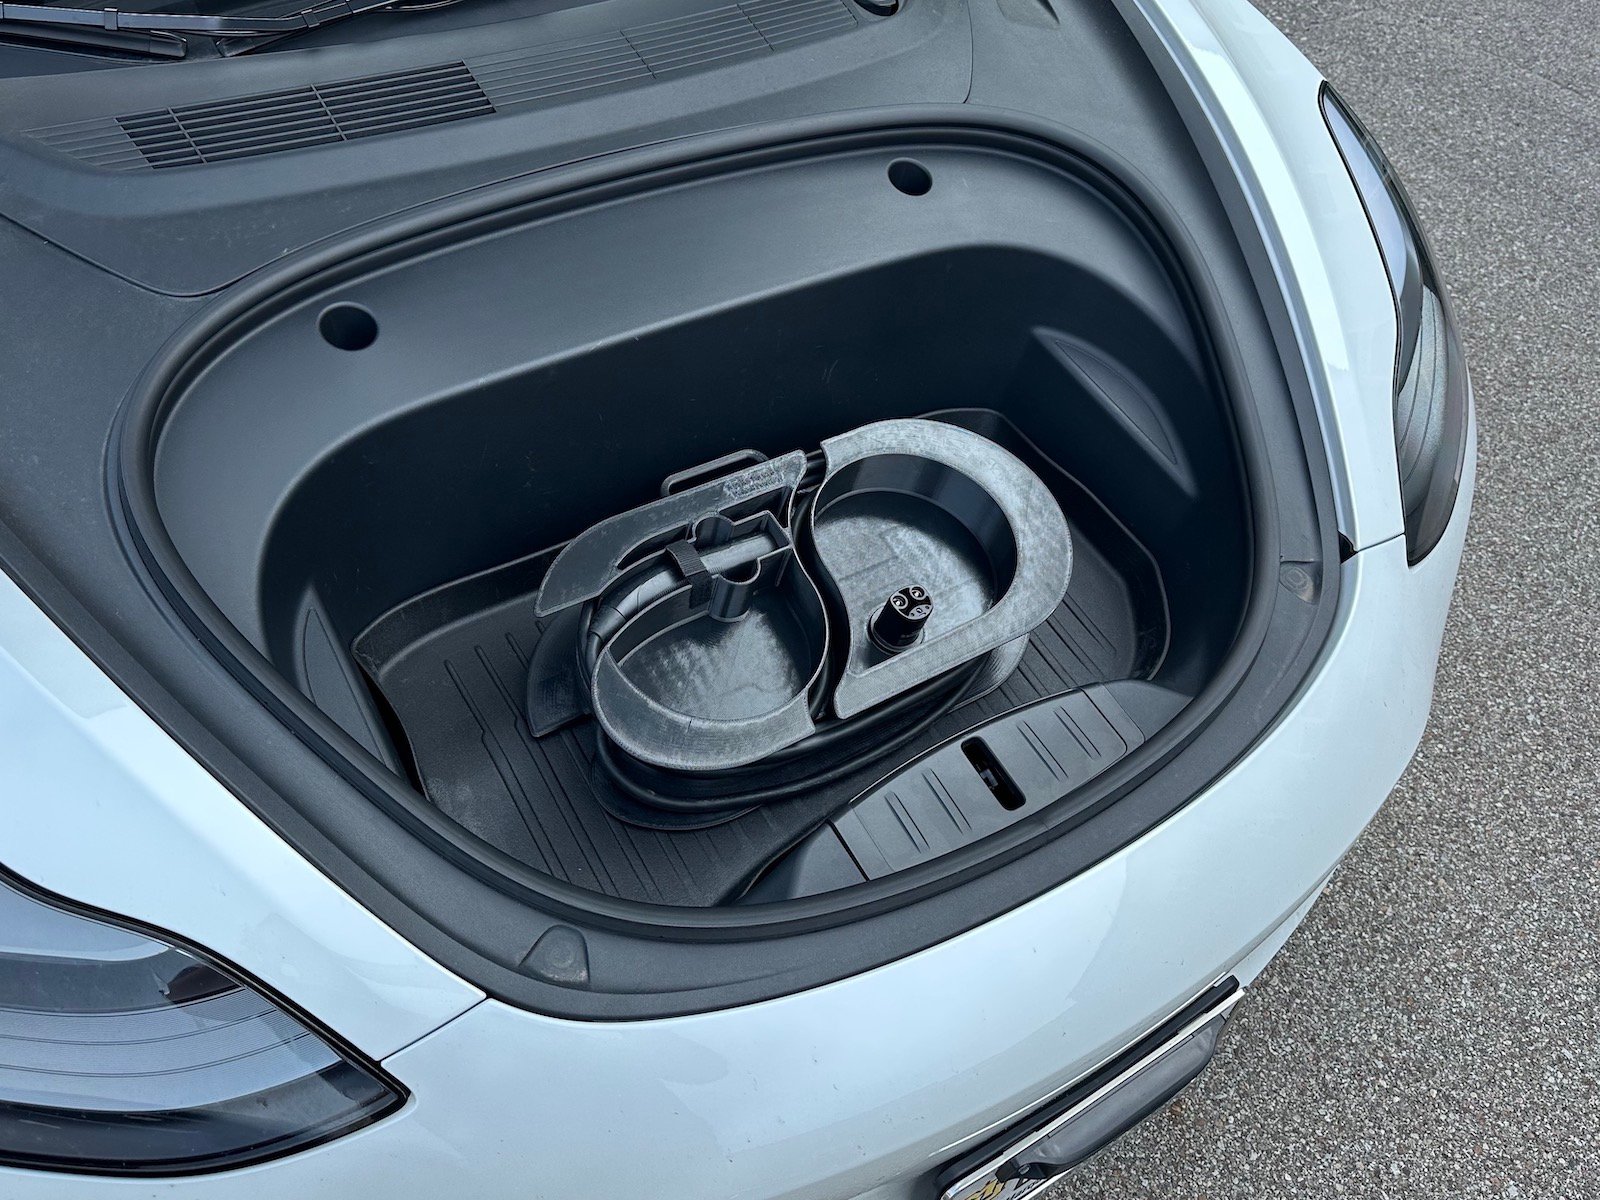 Tangler Wrangler in the front trunk of a Tesla